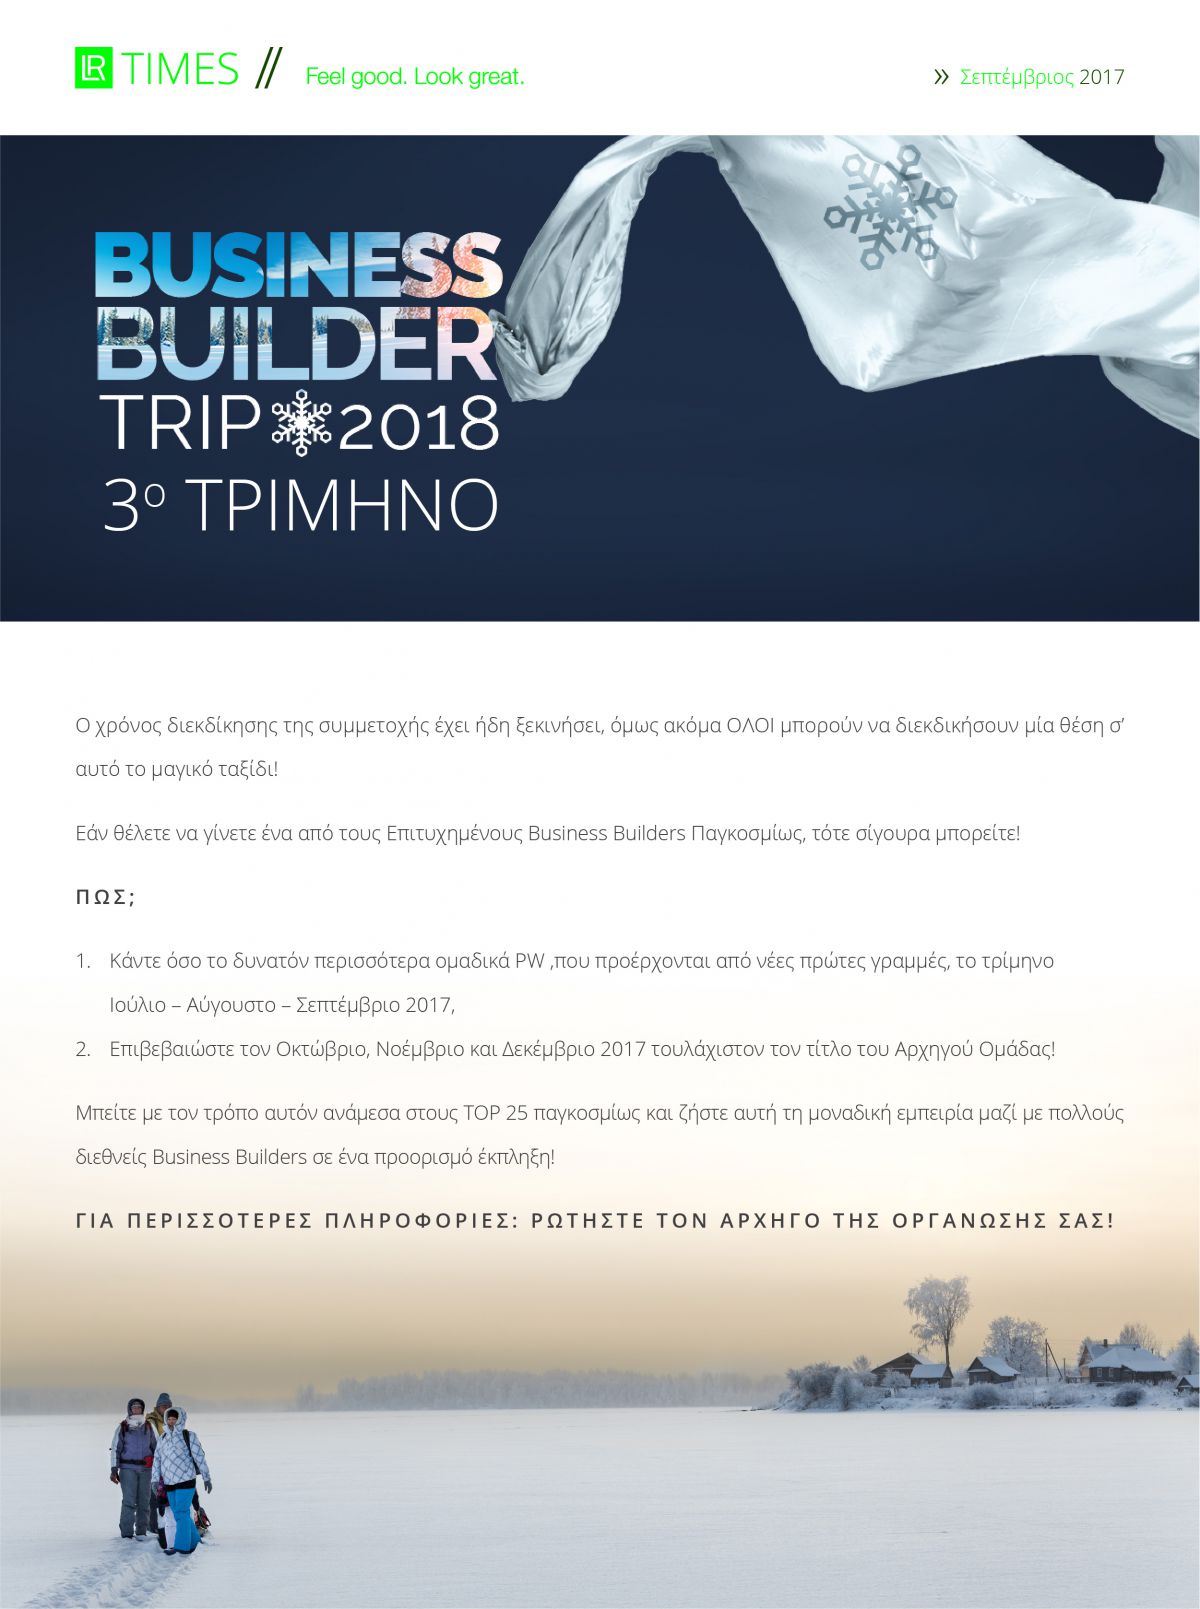 LR NL 2017 09 07 Business Builder Trip